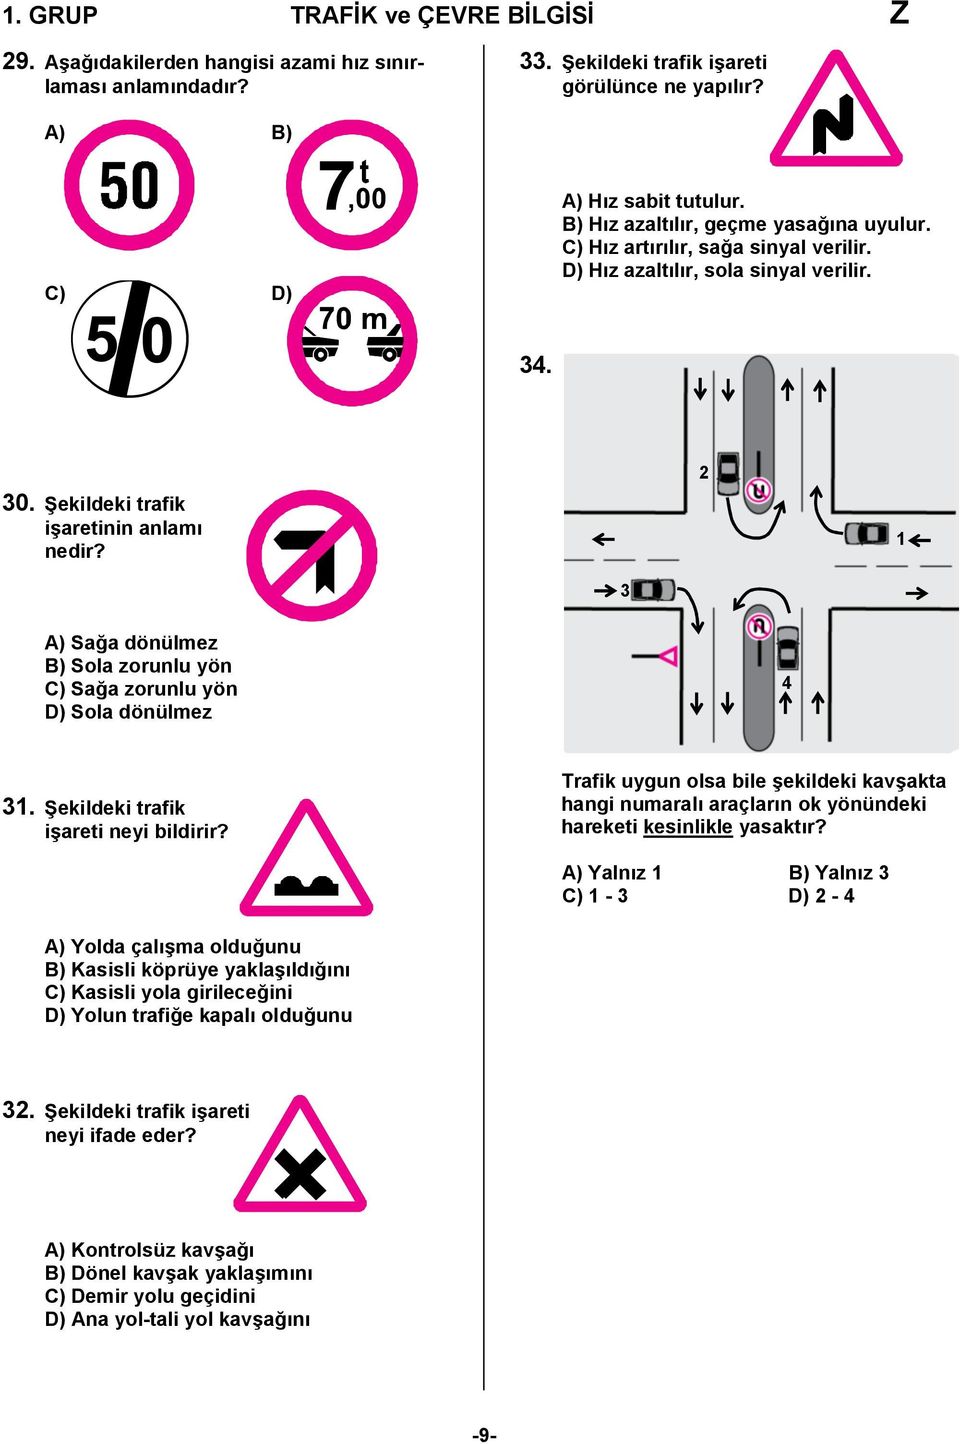 2 1 3 A) Sağa dönülmez B) Sola zorunlu yön C) Sağa zorunlu yön D) Sola dönülmez 4 31. Şekildeki trafik işareti neyi bildirir?